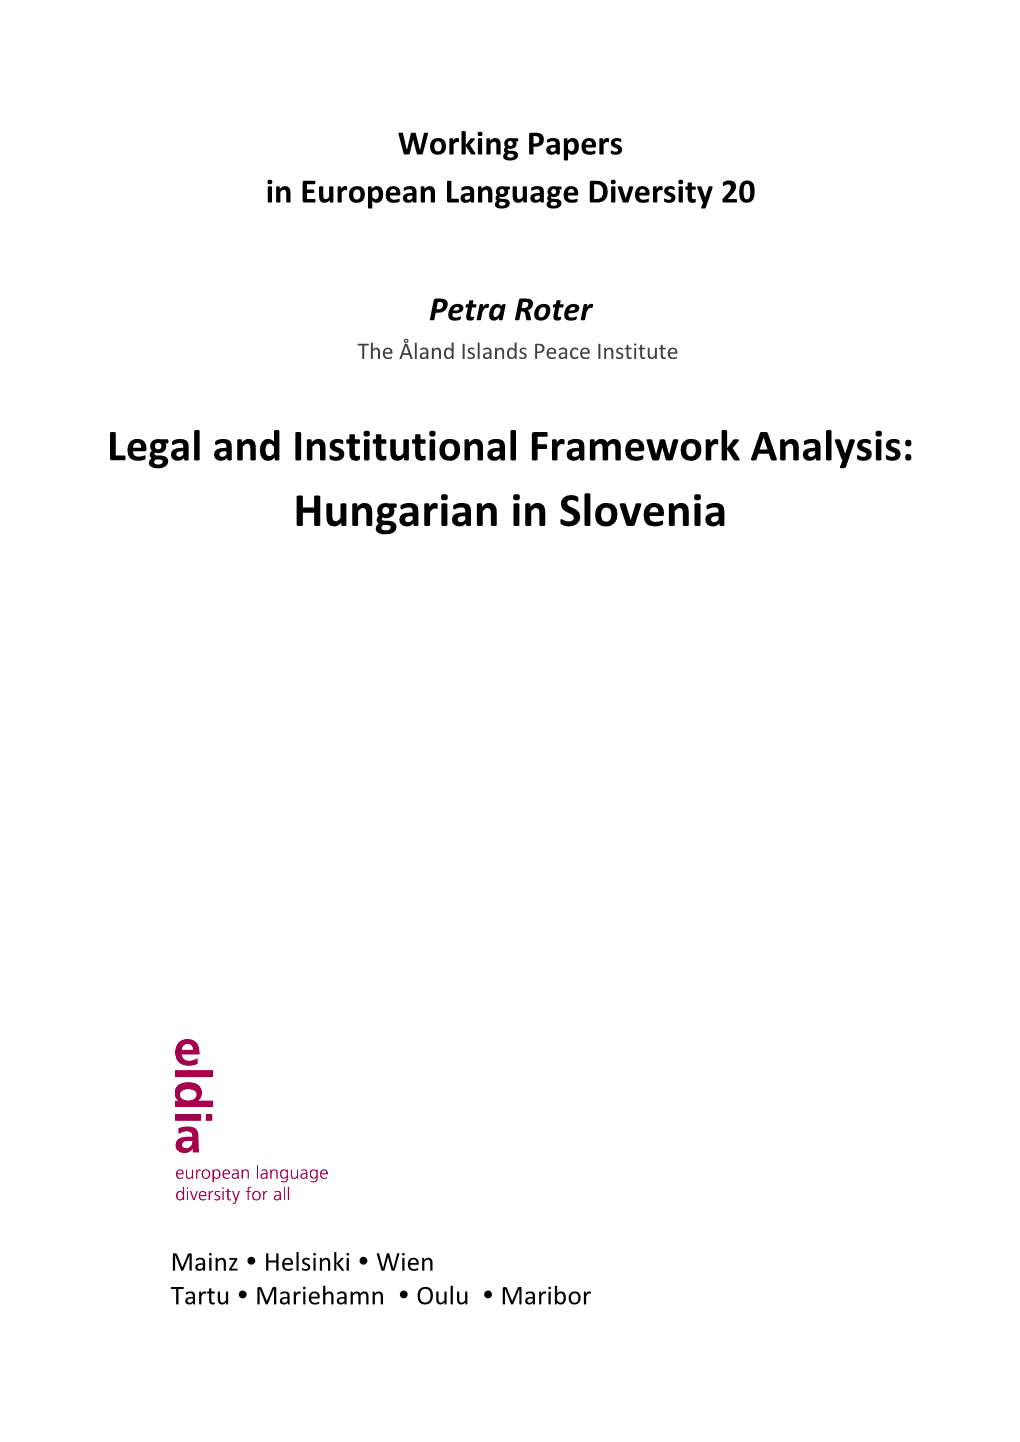 Legal and Institutional Framework Analysis Karelian and Estonian In